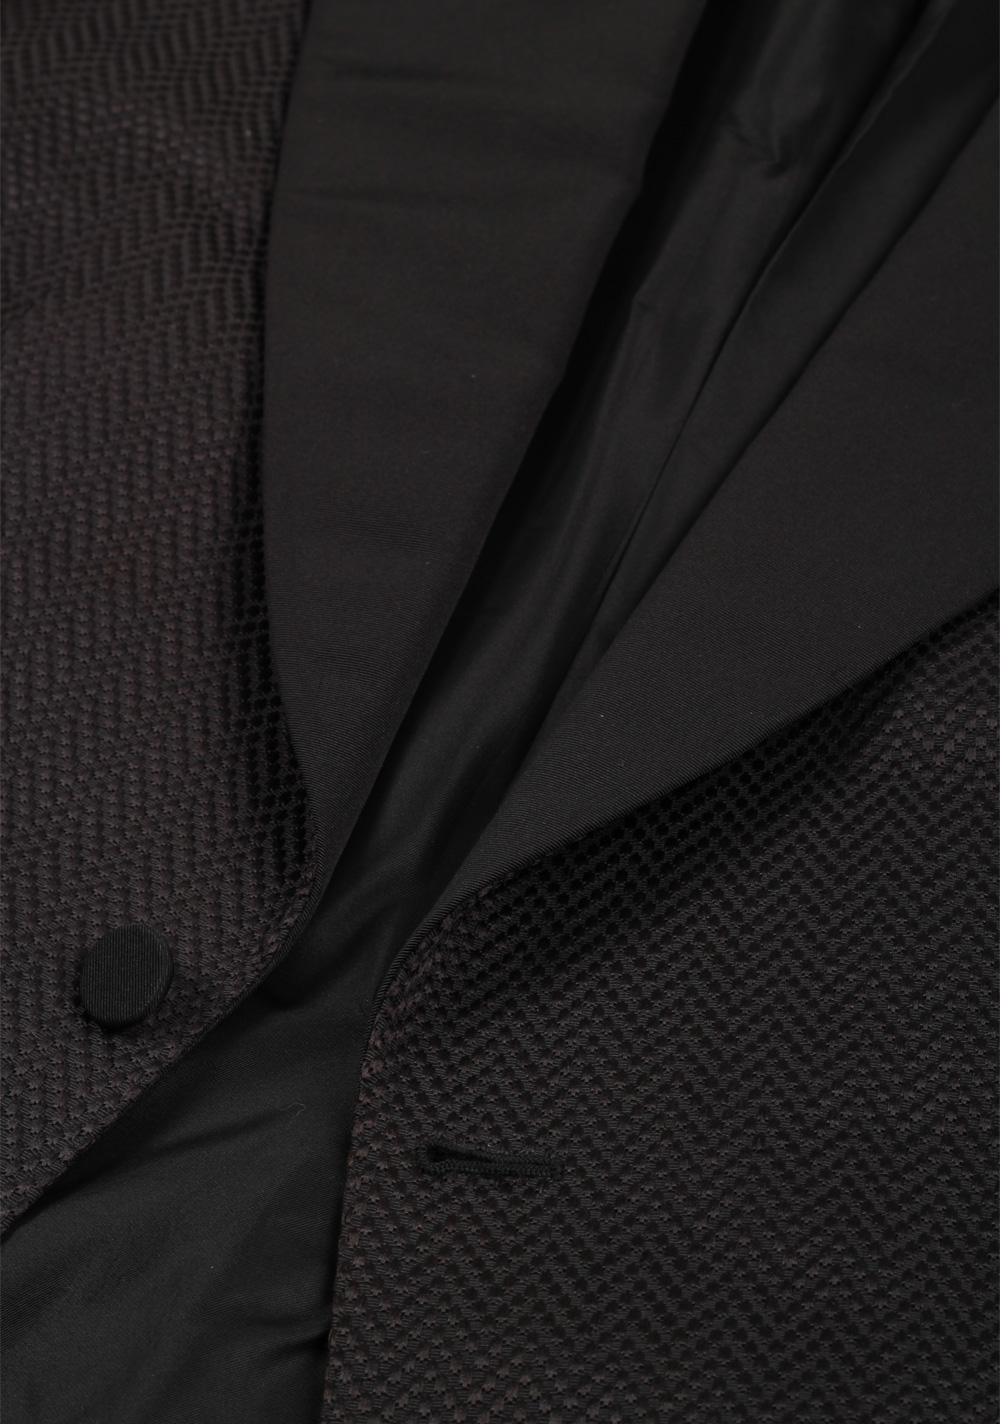 TOM FORD Mountbatten Black Tuxedo Dinner Jacket Size 54 / 44R U.S. | Costume Limité